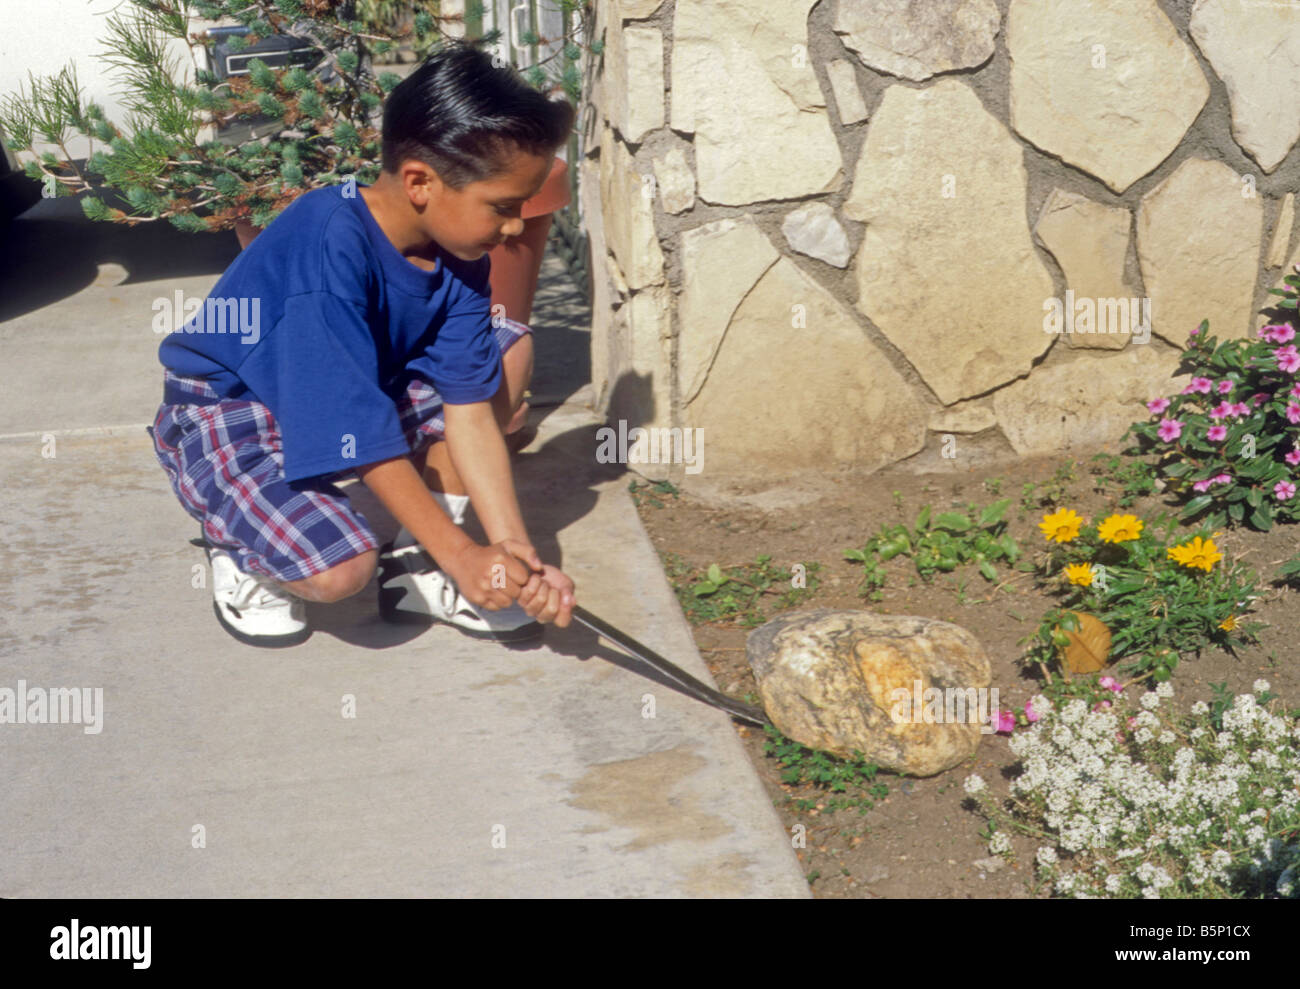 Hispanic boy uses lever to move rock in garden Stock Photo